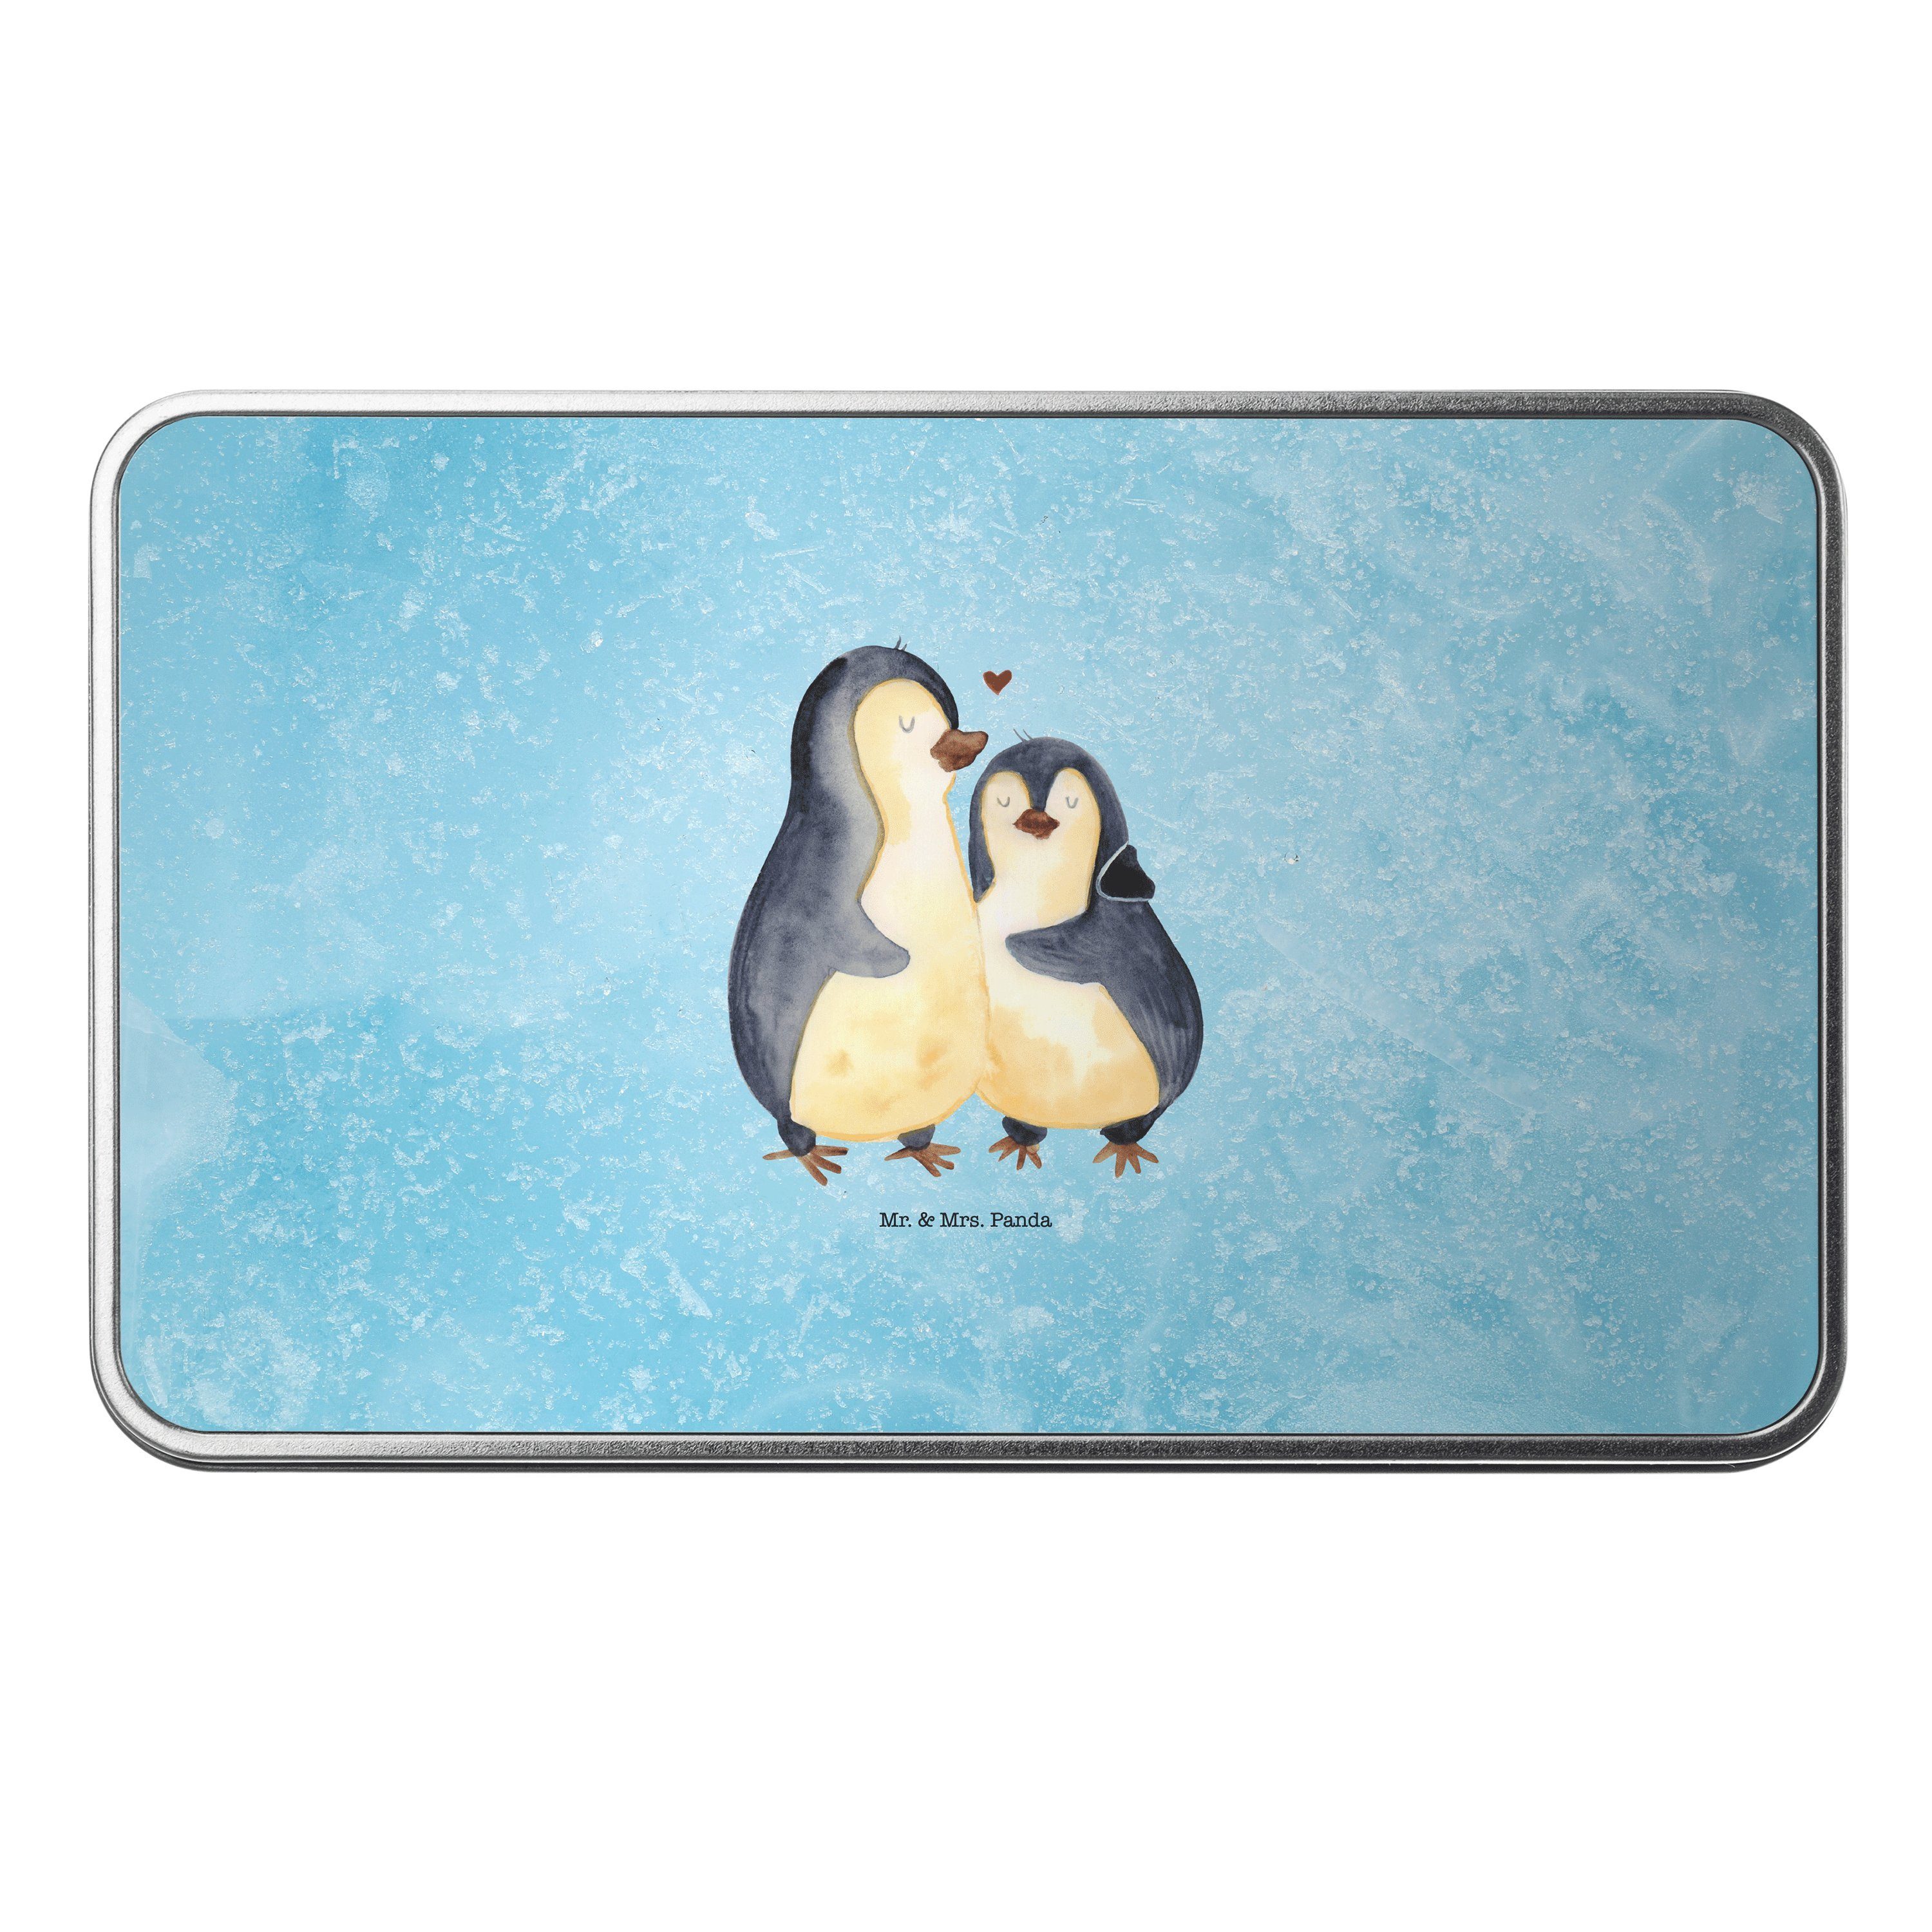 Mr. & Mrs. Panda umarmend St) verknallt, Eisblau Pinguin Geschenk, (1 - Hochzeitsgeschenk, Dose 